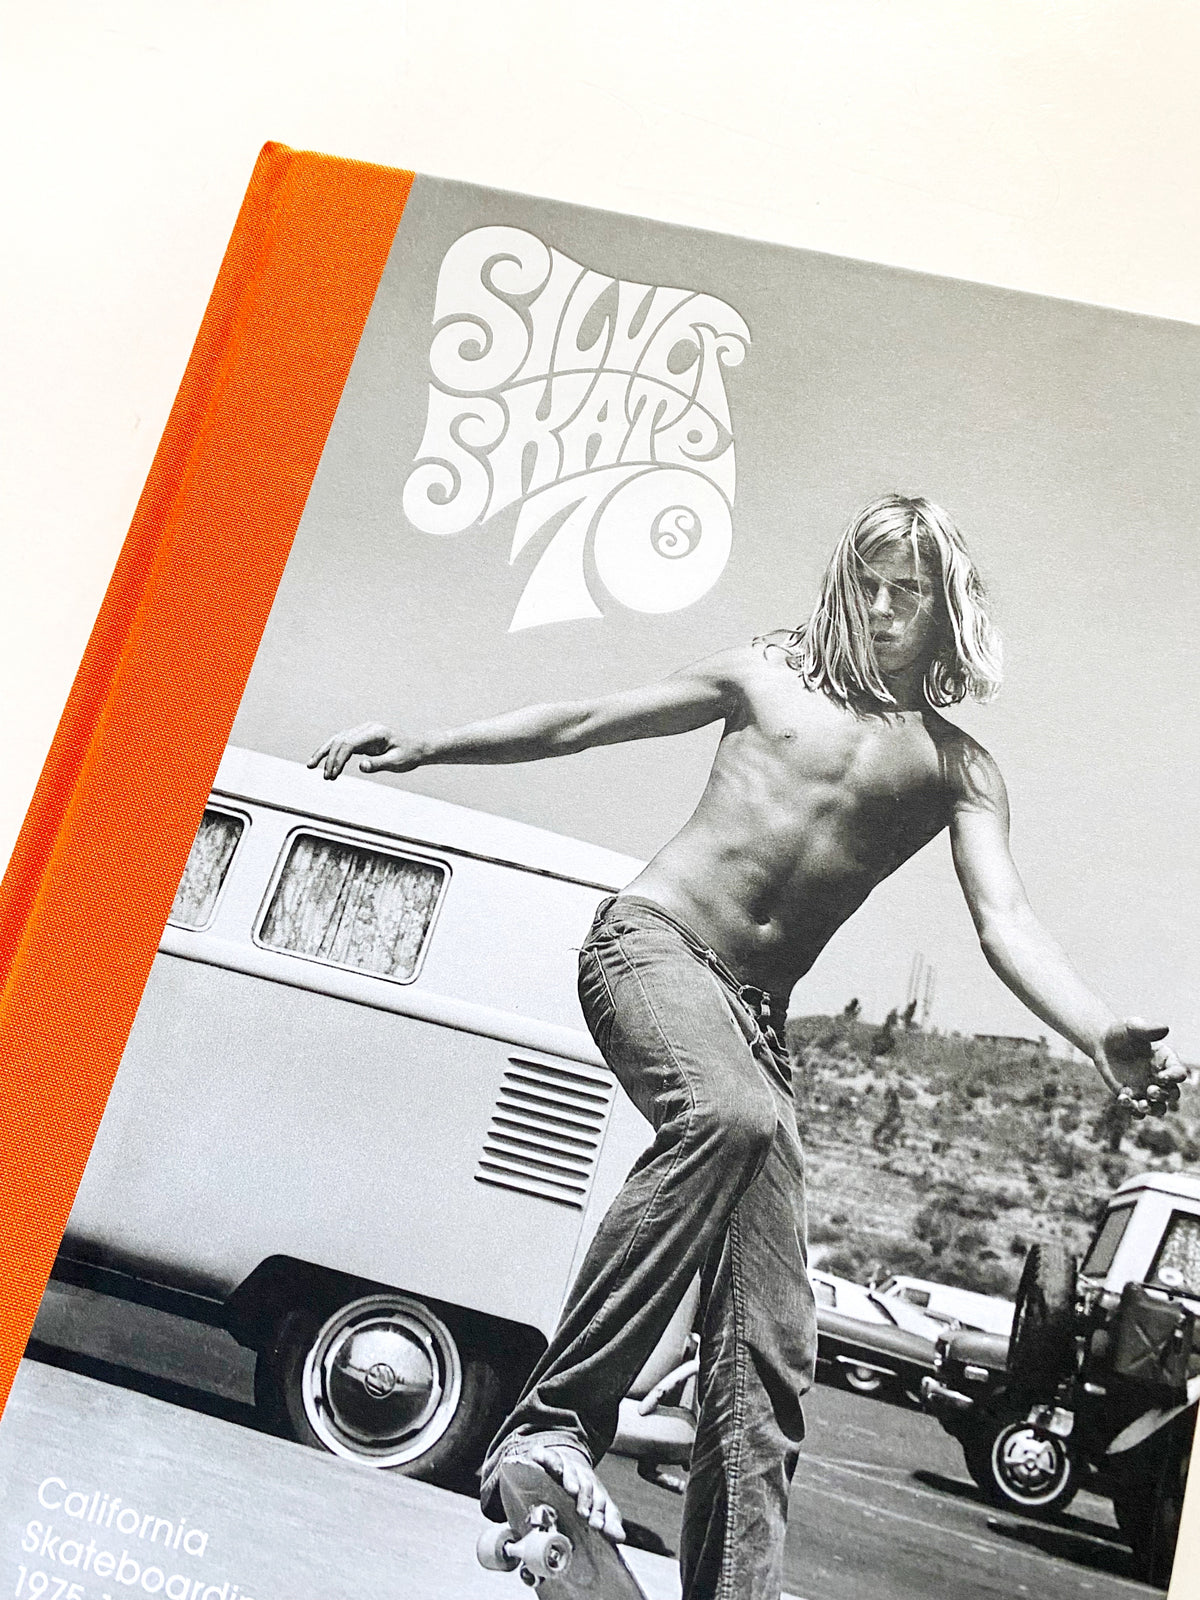 Silver. Skate. Seventies